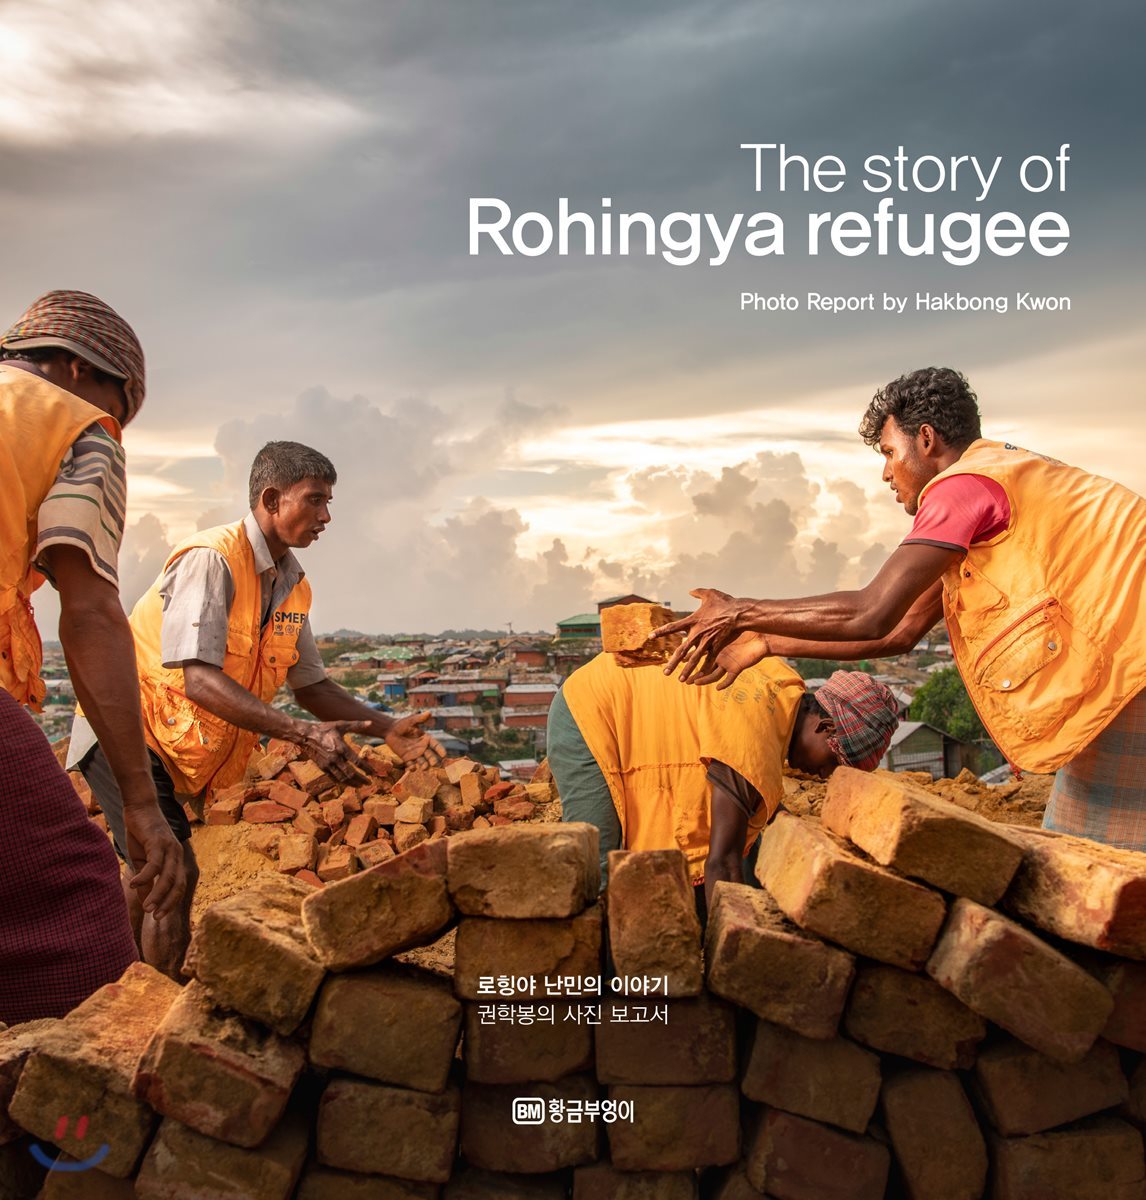 The story of Rohingya refugee